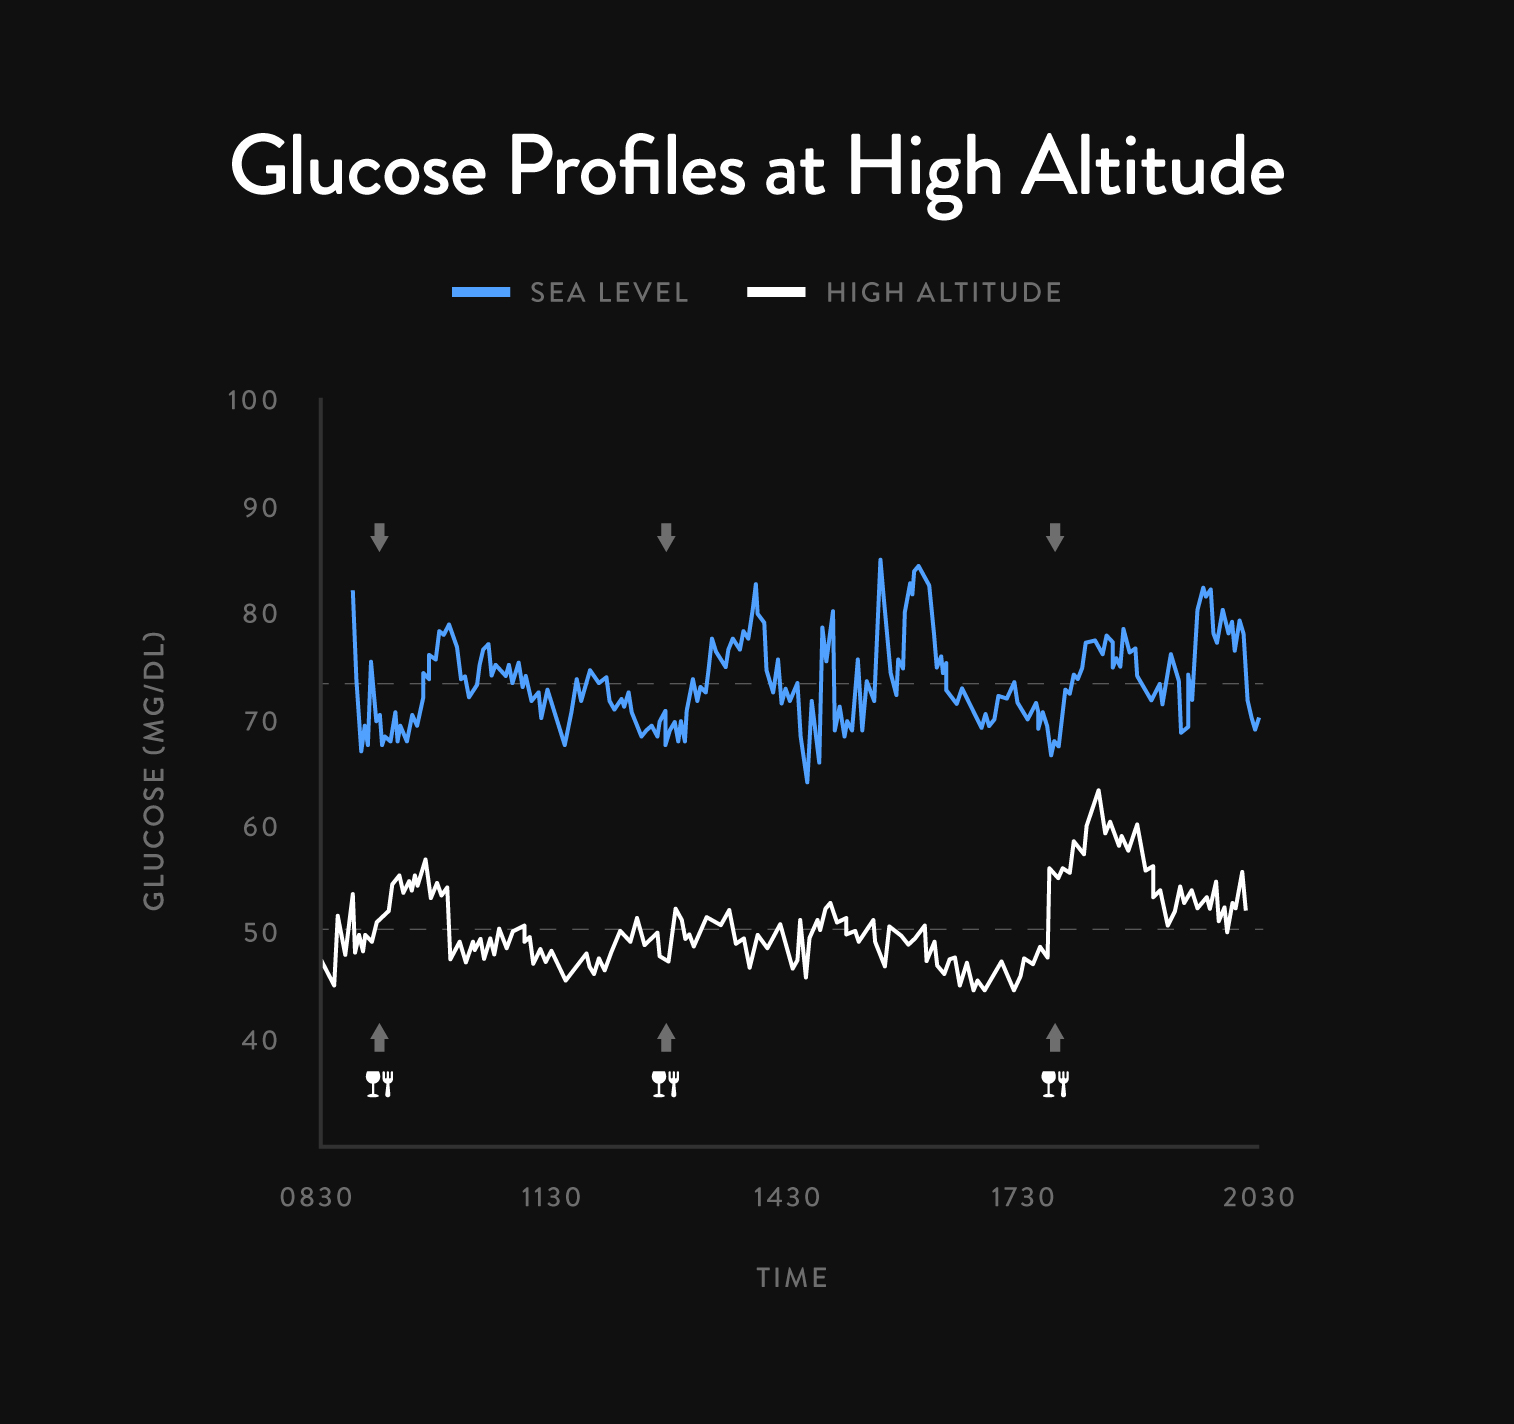 Glucose levels at high altitude versus sea level